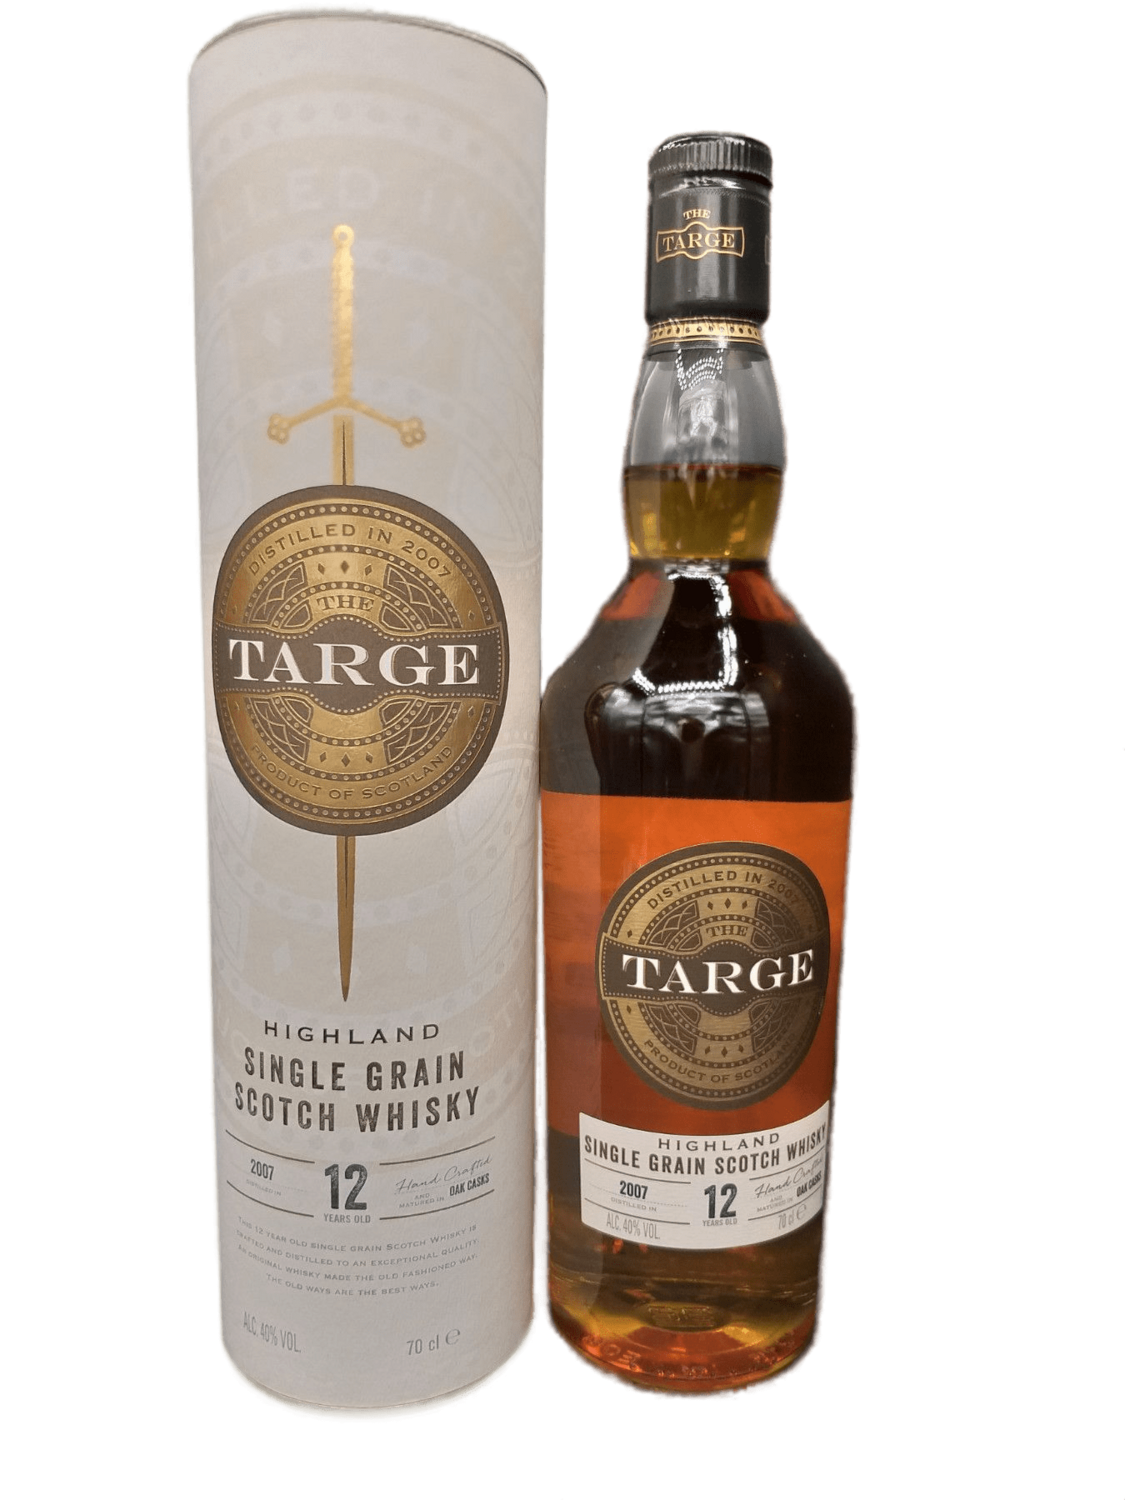 Whisky Single Distilled VOL. Scotch 2007 Targe Grain Years The 40% (1x0,7ltr.) 12 OVP Scotland